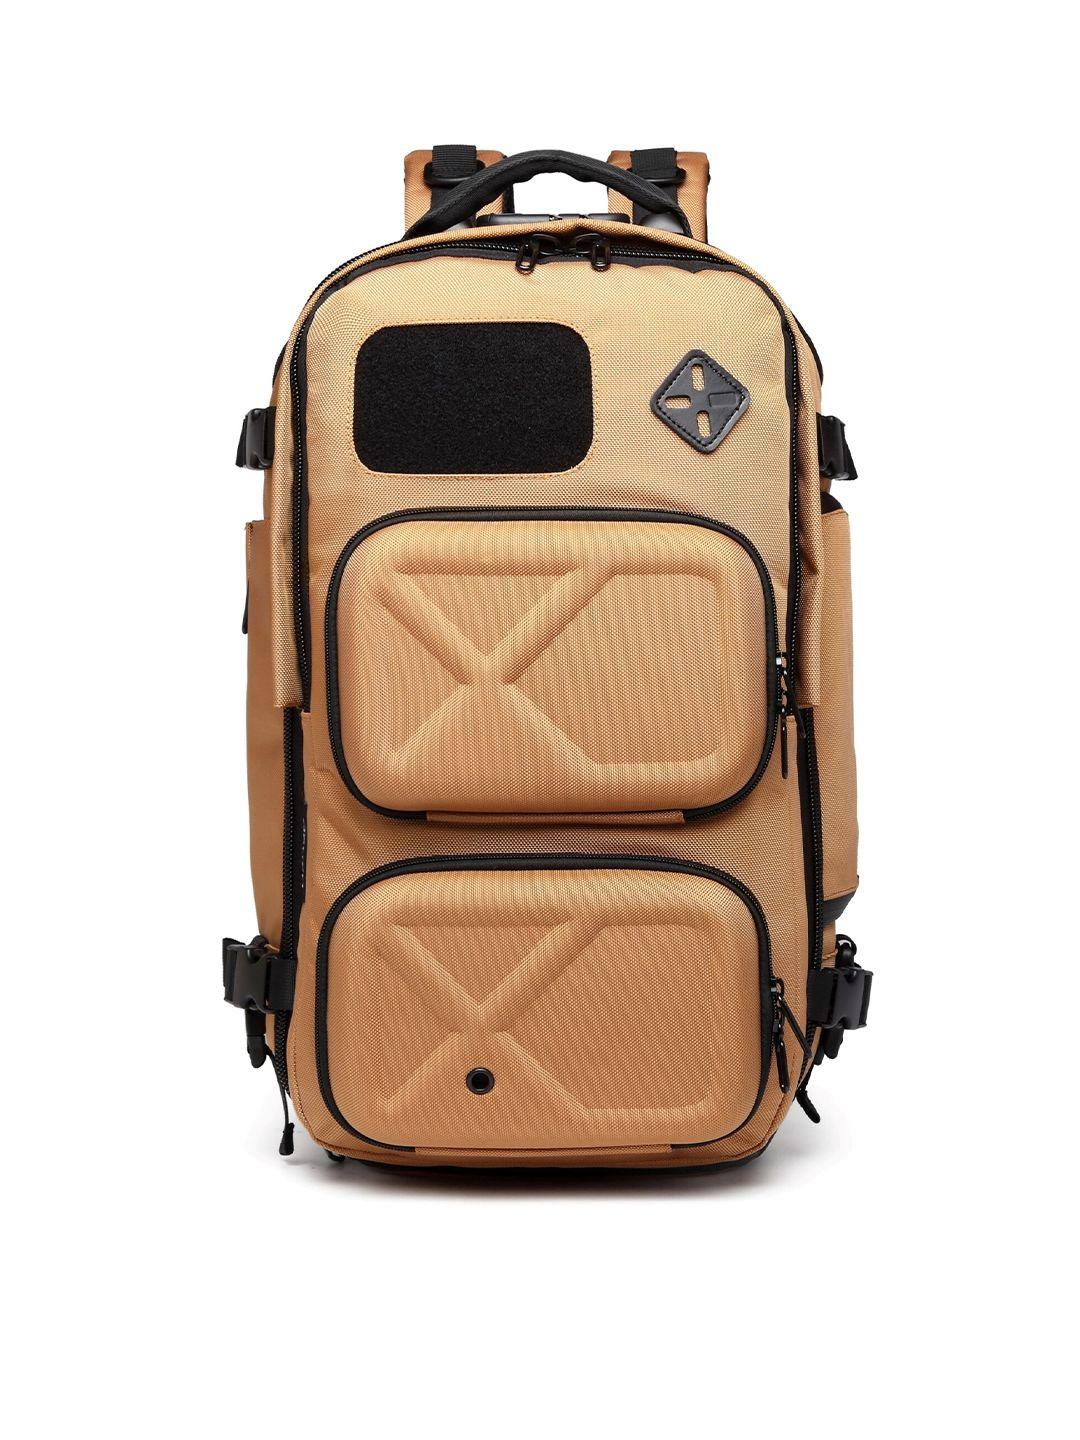 ozuko 9309s range soft case backpack